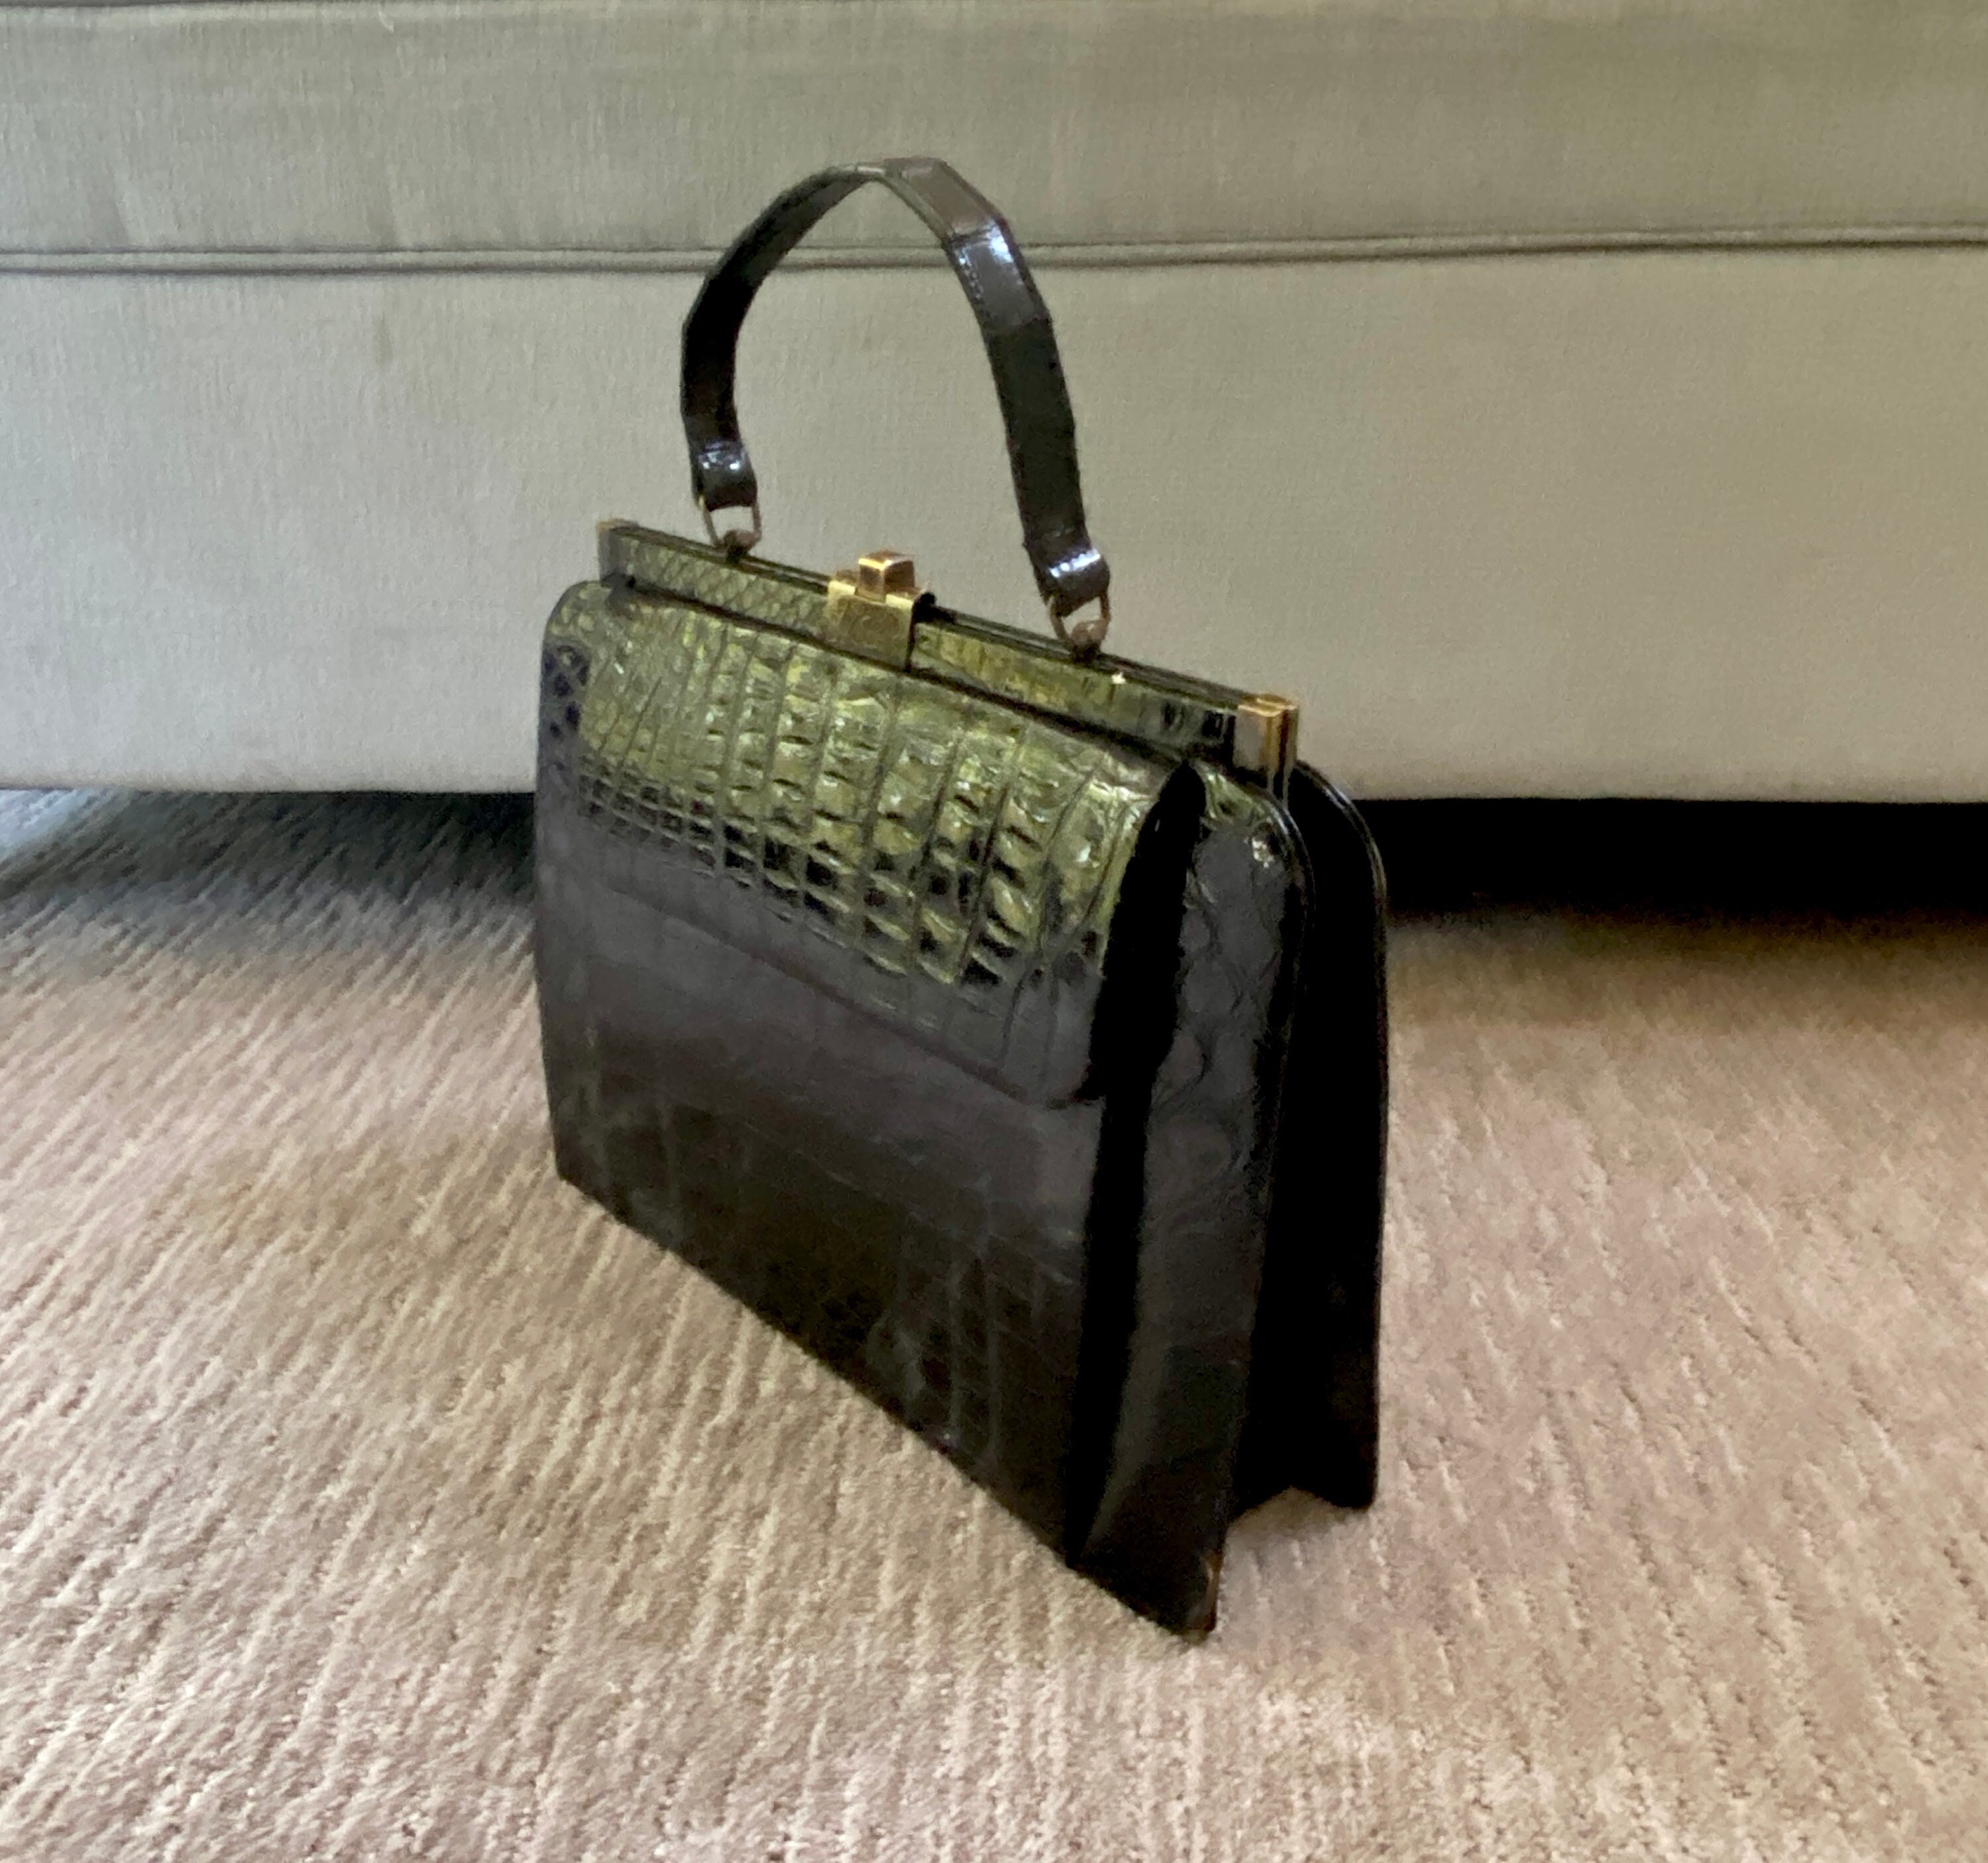 Crocodile Leather Handbags - 453 For Sale on 1stDibs  crocodile bag price, crocodile  leather handbags, vintage crocodile bag